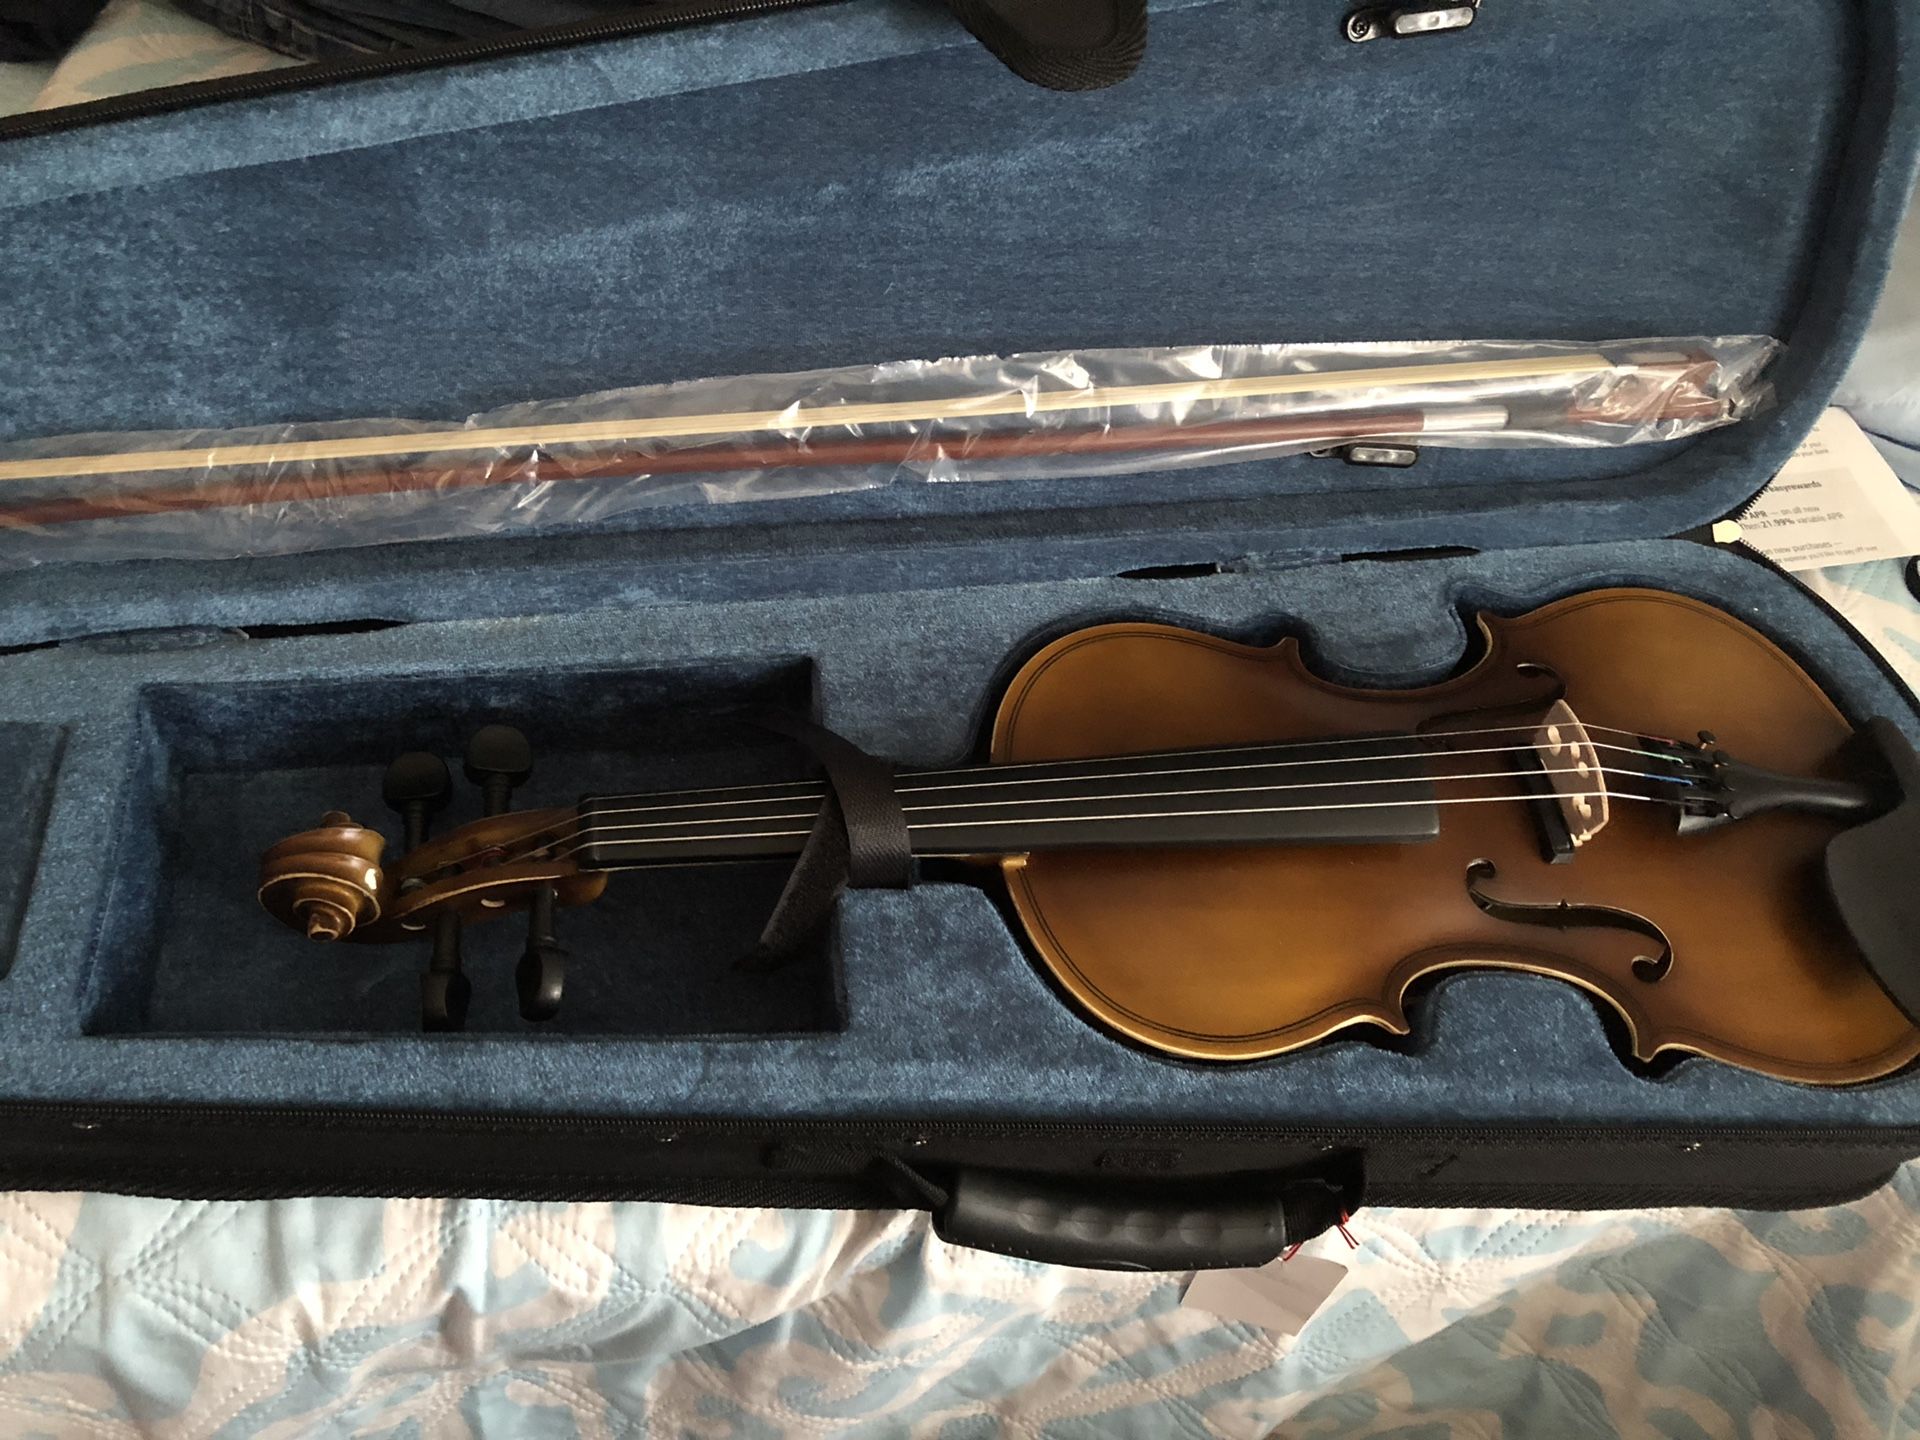 4/4 violin brand new